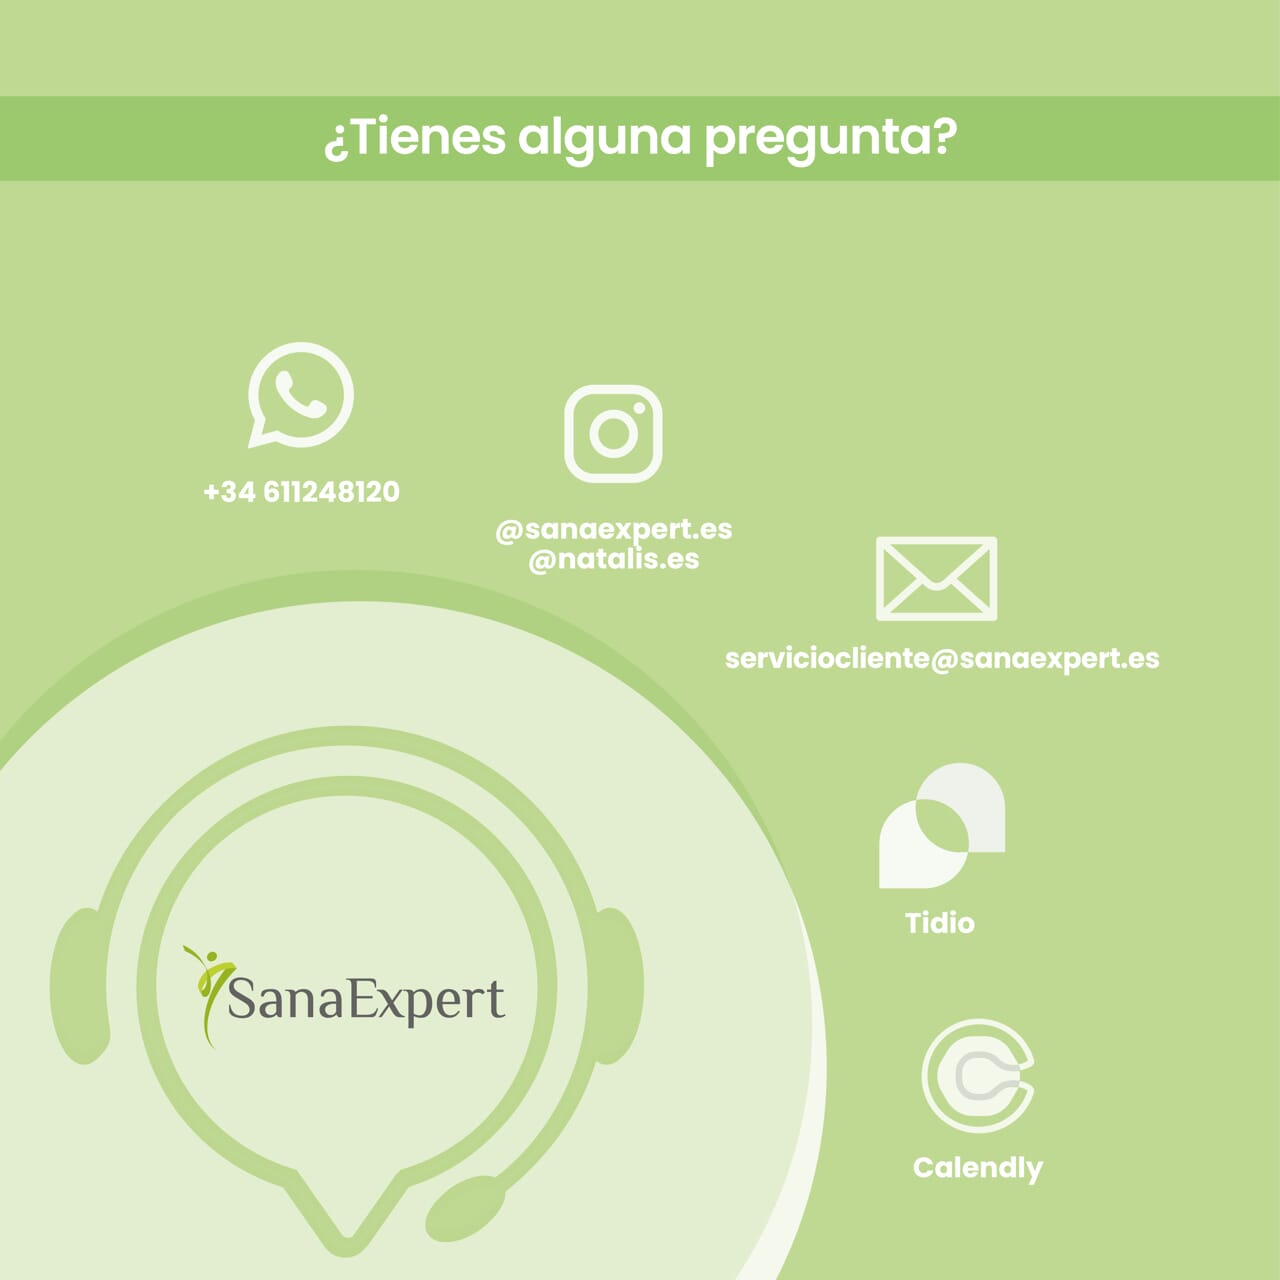 SanaExpert Creatine Pro (Creapure®)